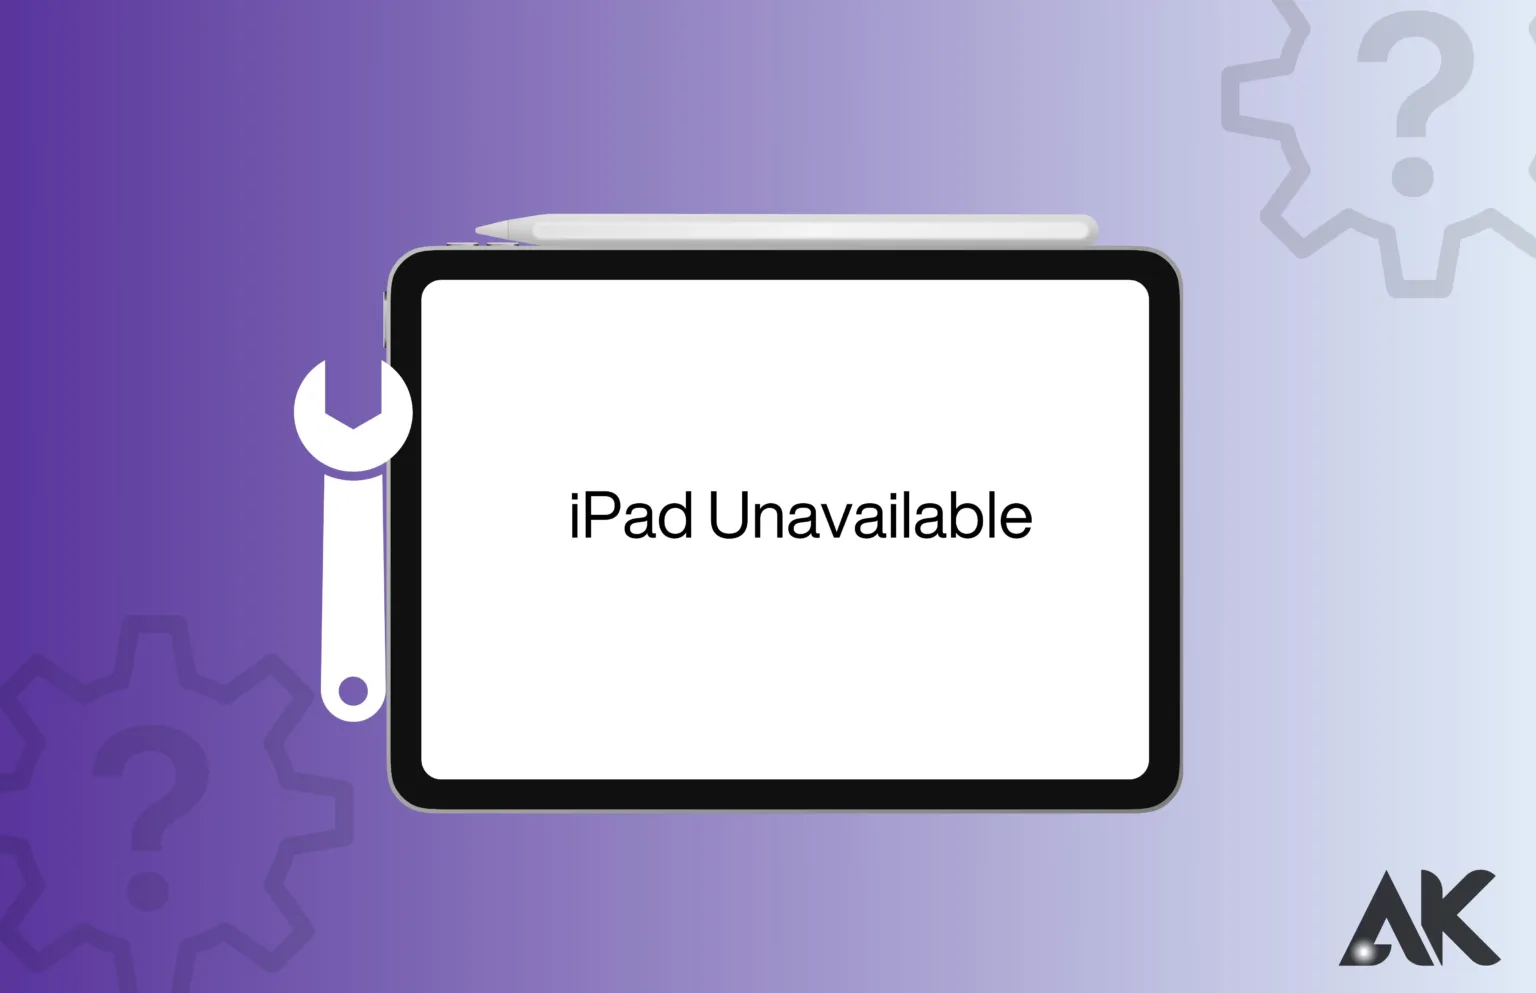 How To Fix iPad Unavailable Press Home To Unlock - 5 Best Ways